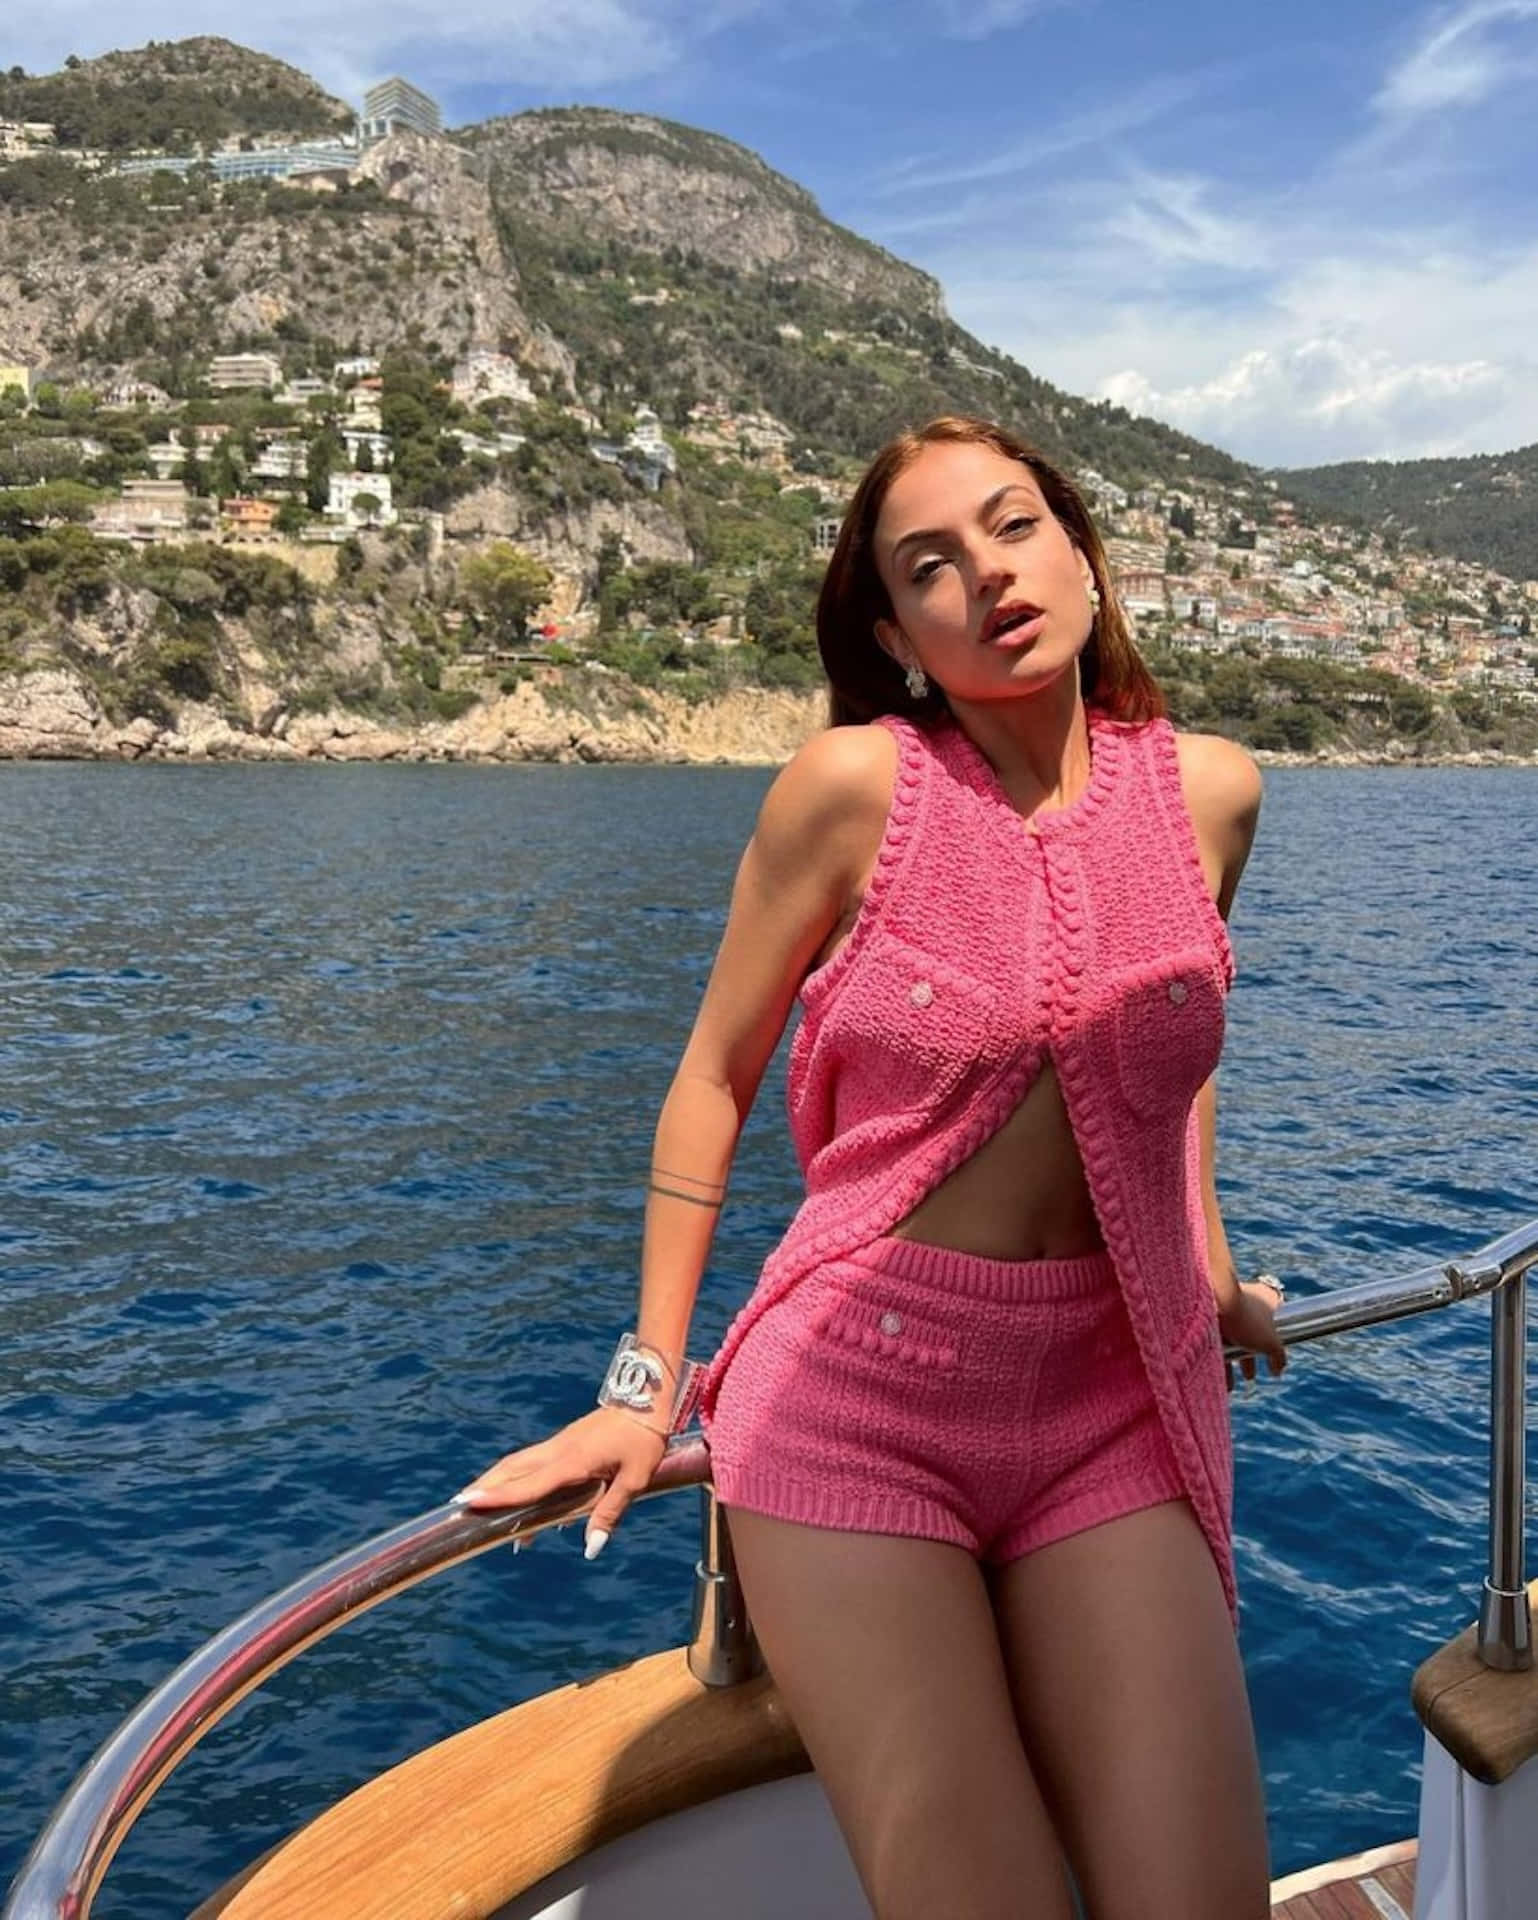 Inanna Sarkis Yacht Pose Mediterranean Backdrop Wallpaper